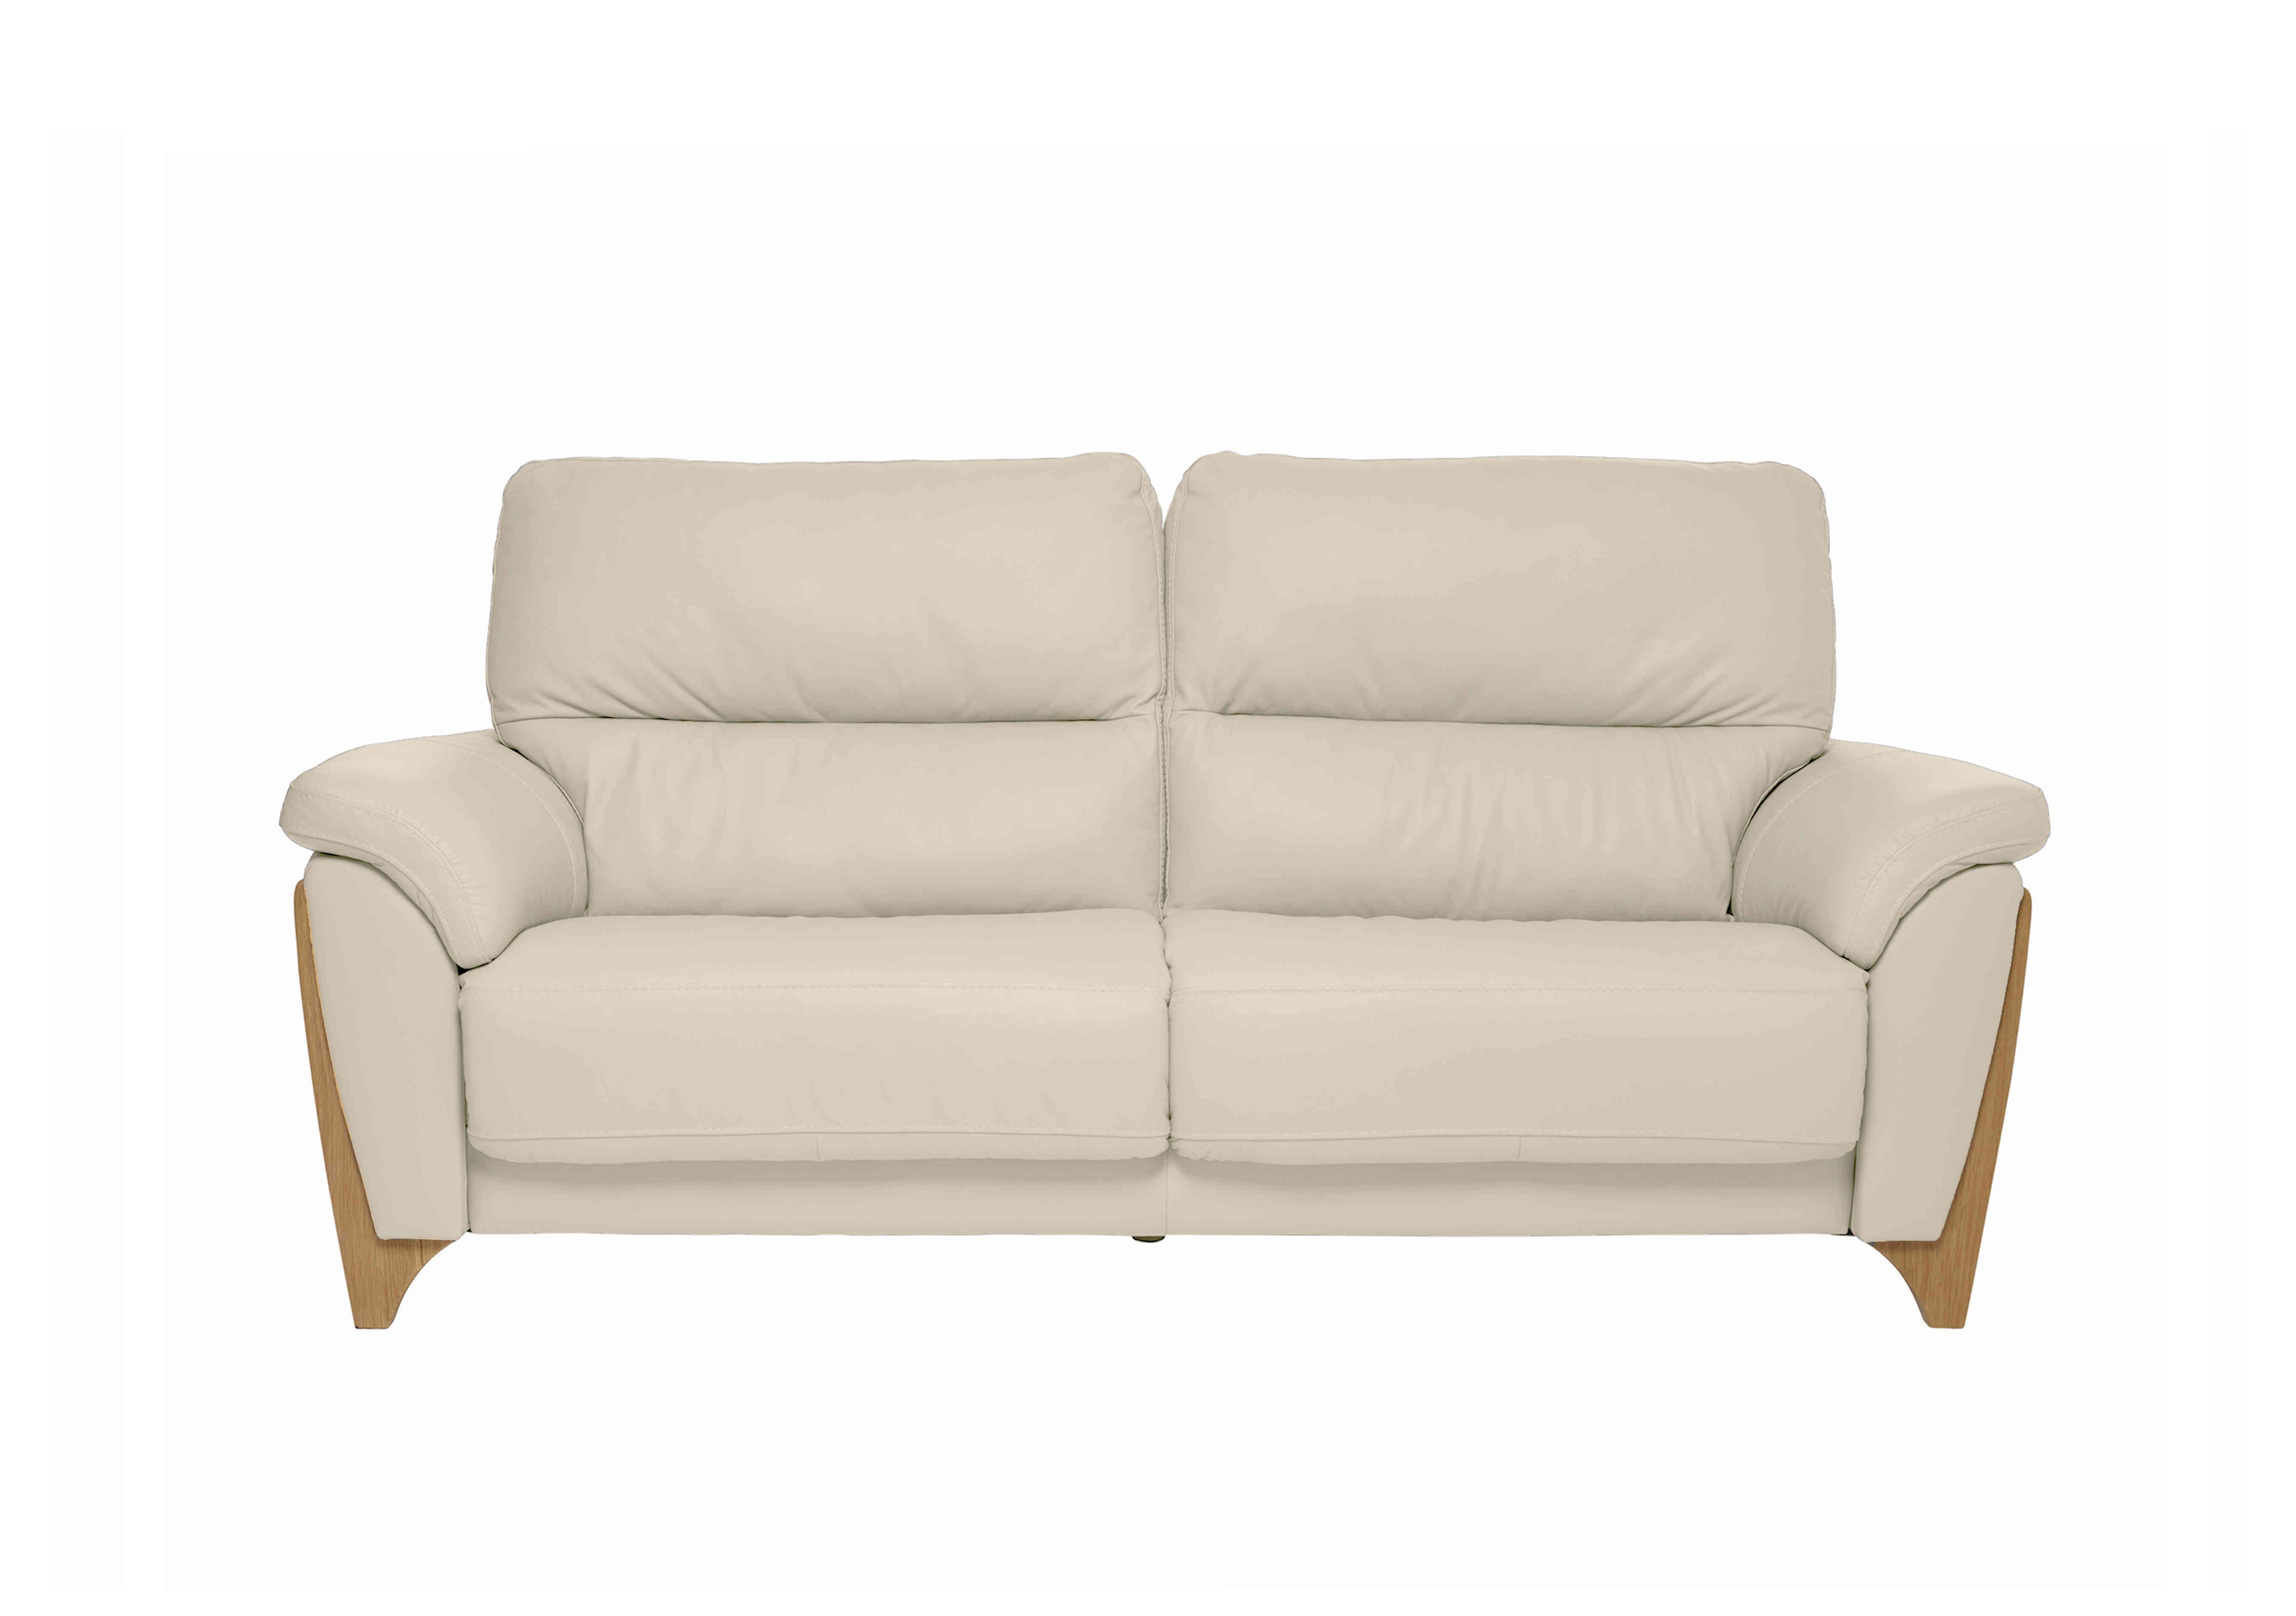 Enna Large Leather Sofa in L904 on Furniture Village